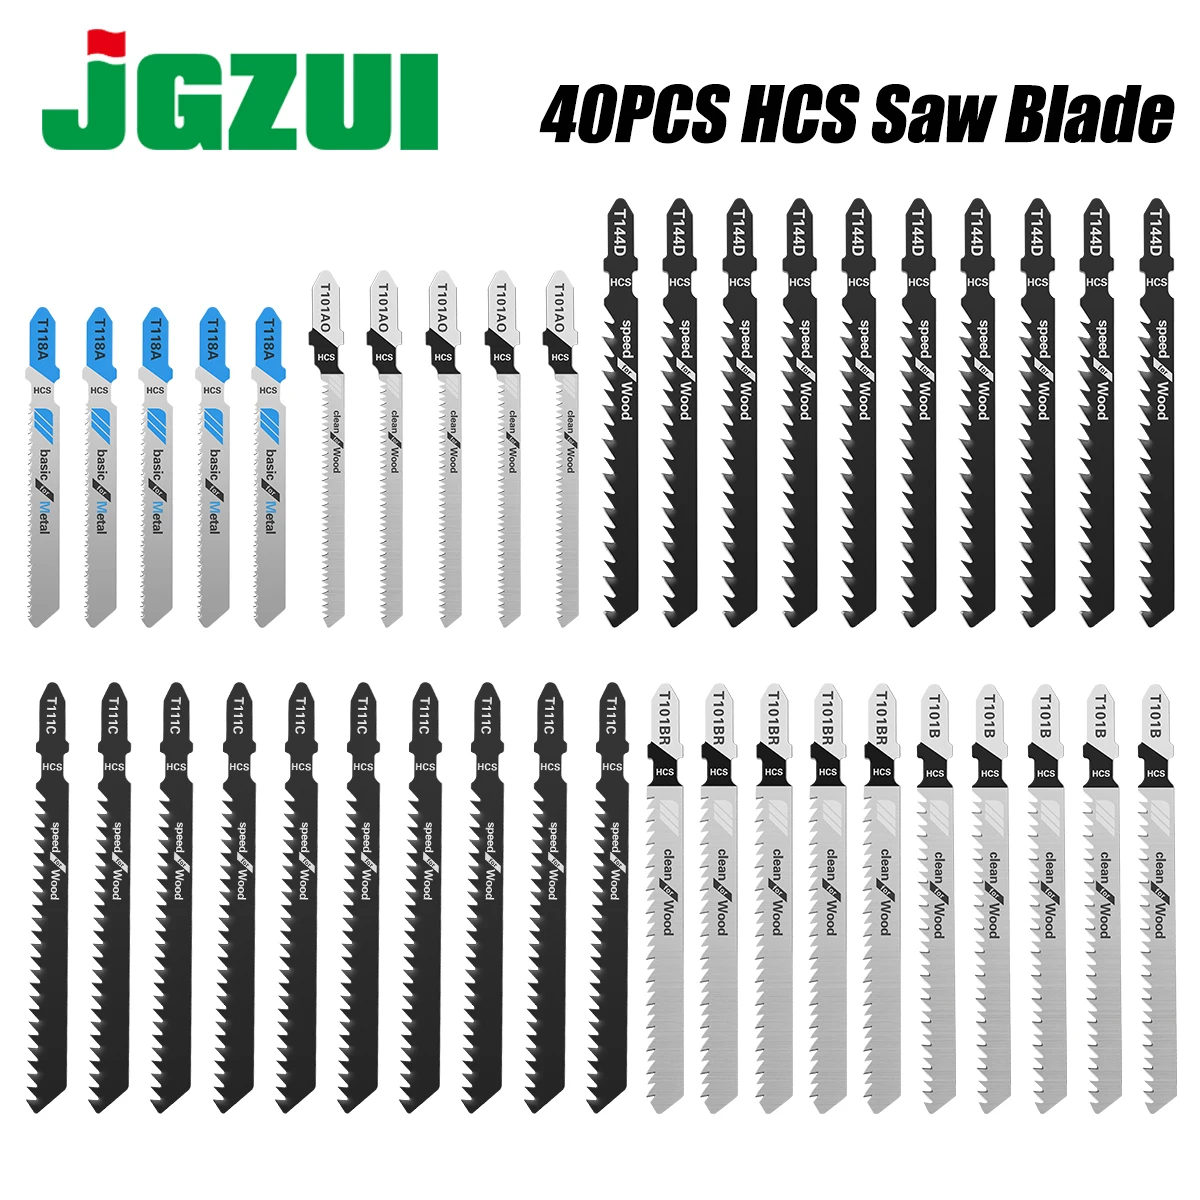 

40pcs Jig Saw Blade Set T-shank HCS Assorted JigSaw Blades Sharp Fast Cut Down Jigsaw Blade For Wood Metal Plastic Cutting